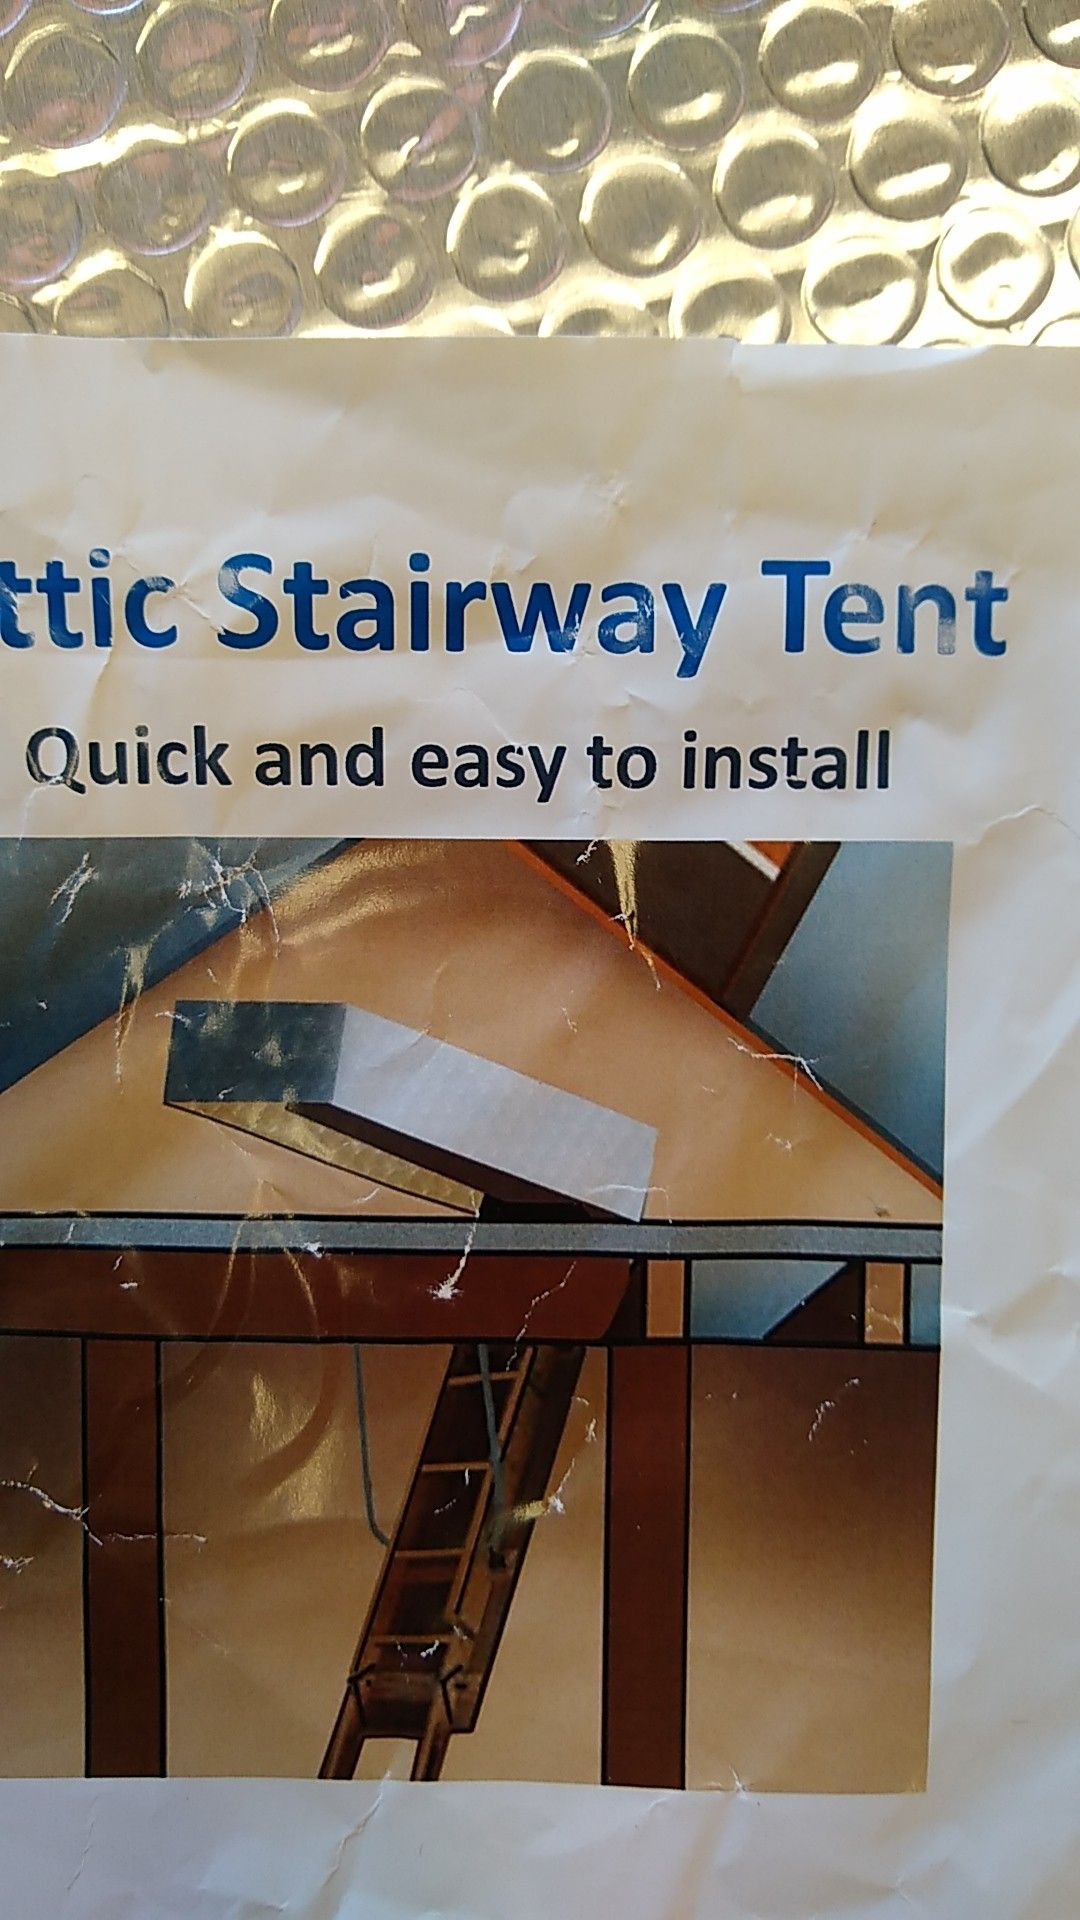 Attic stairway tent